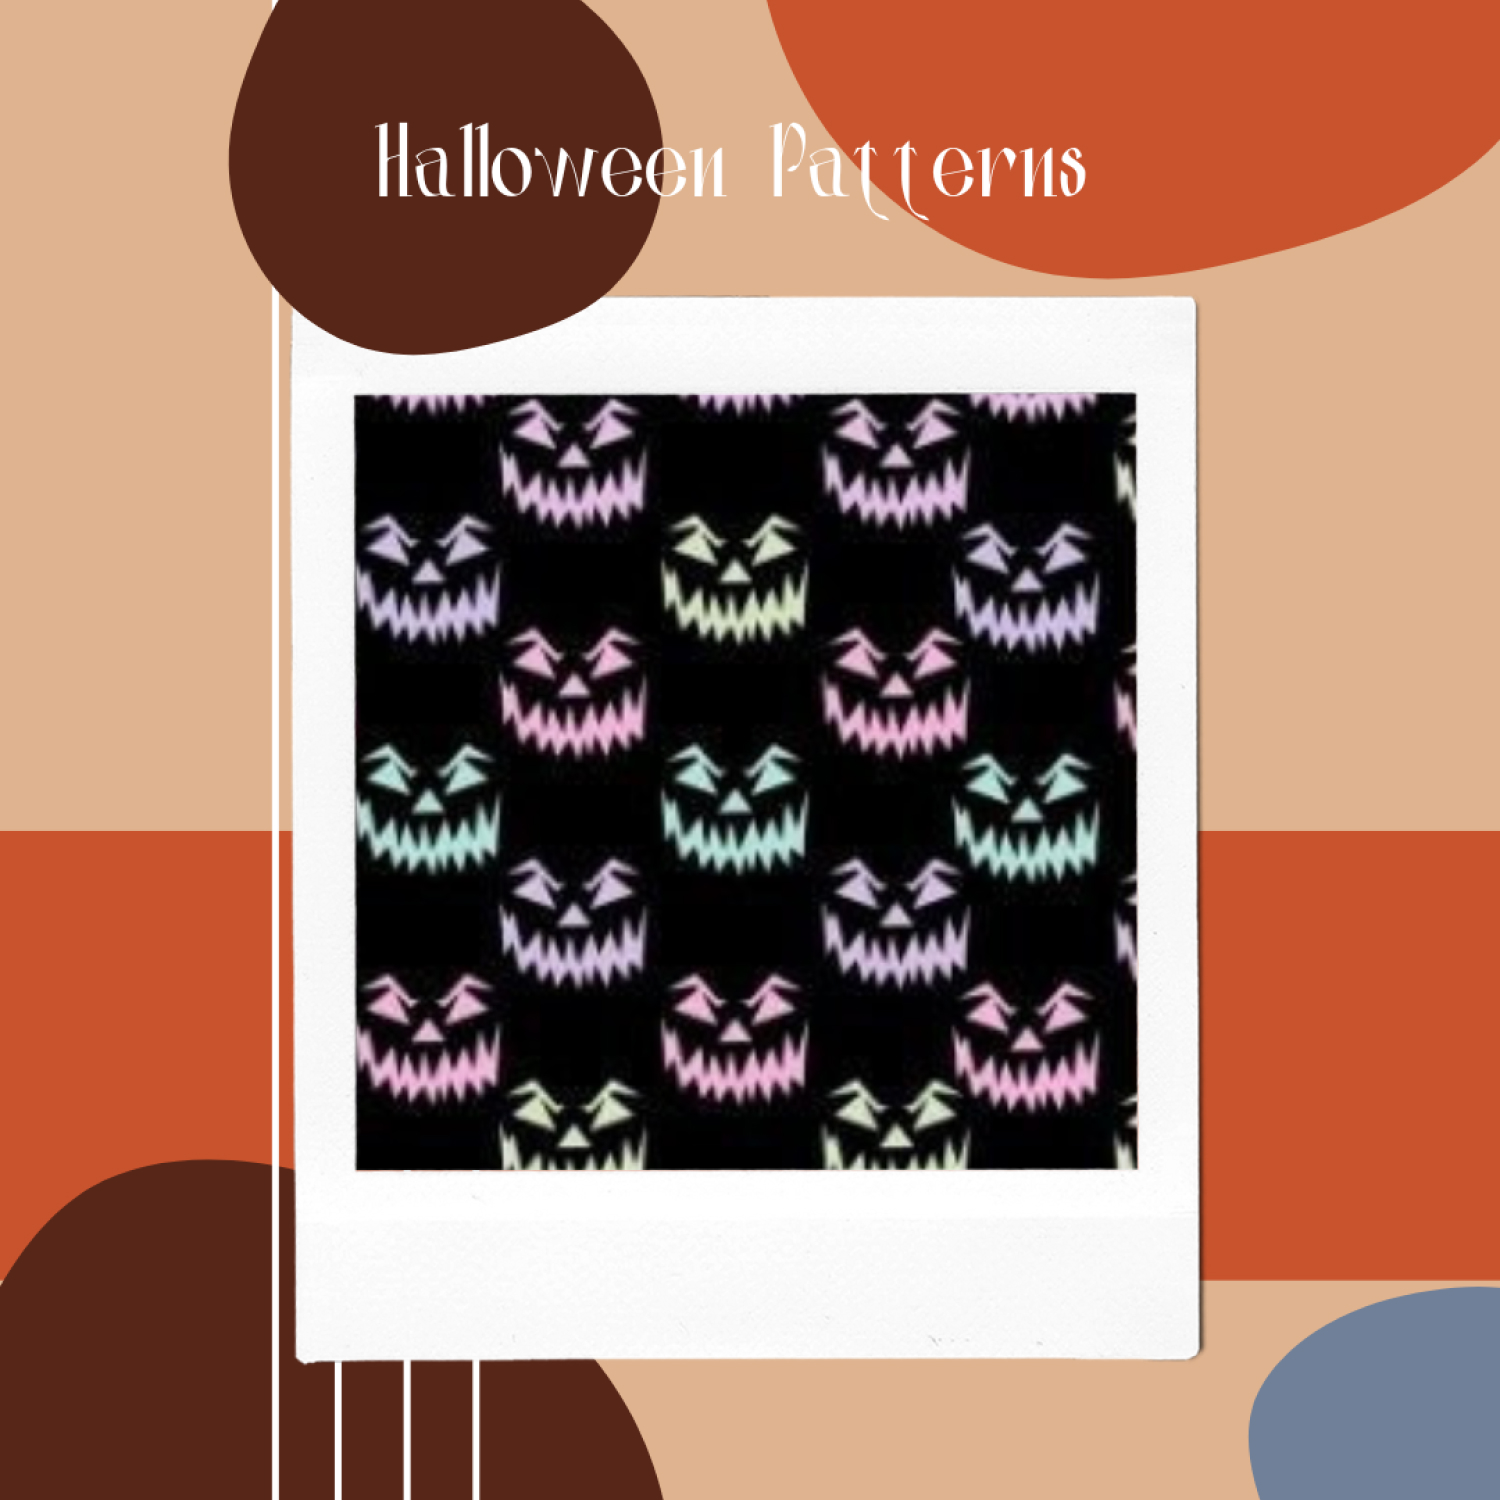 Halloween Patterns Paper, Background KDP.